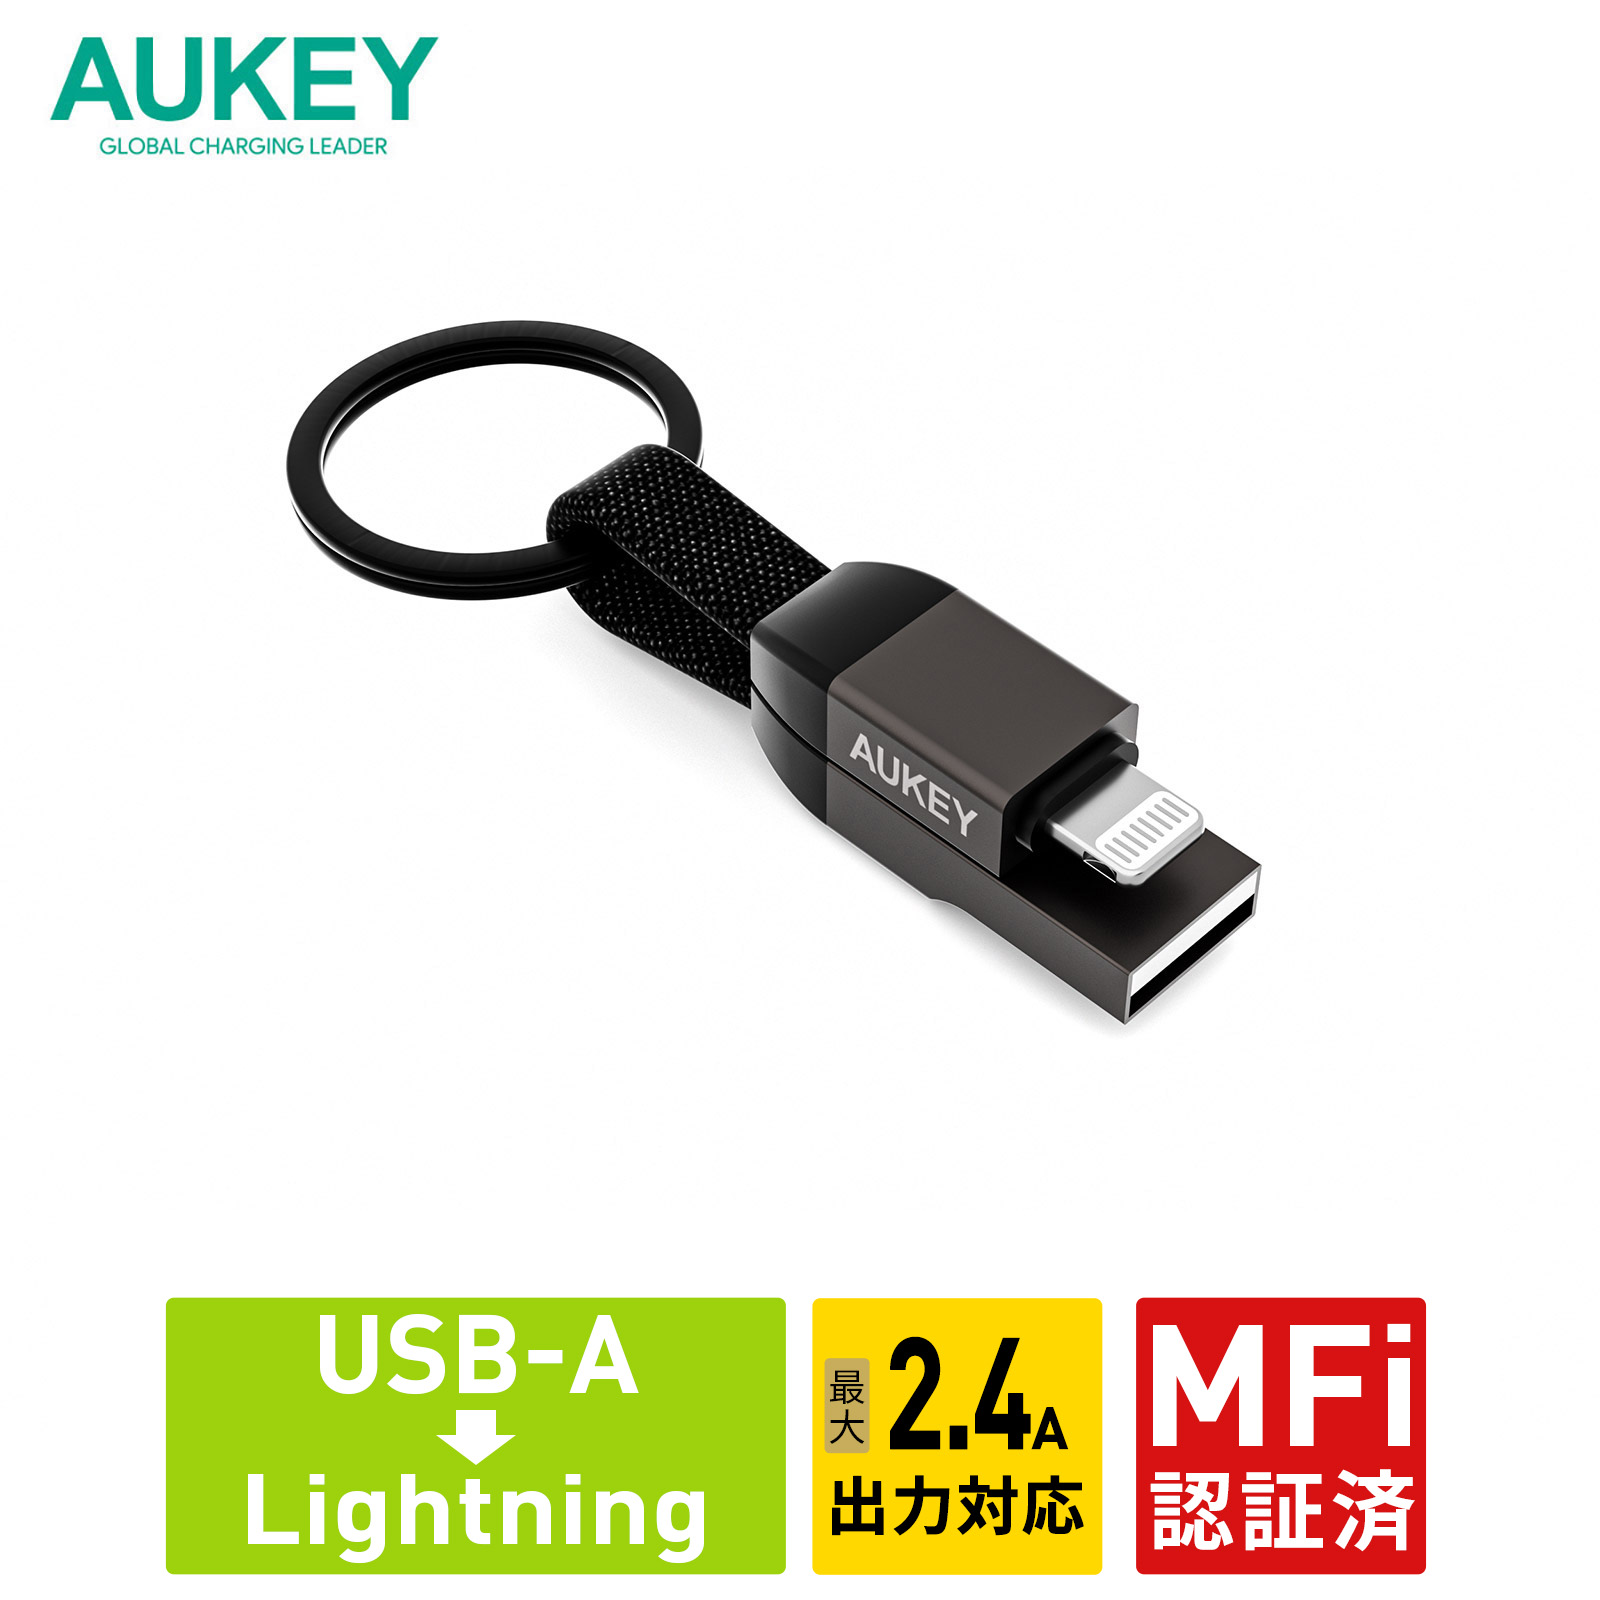 USBストラップ型ケーブル Type-A to Lightning キーホルダー型 ライトニングケーブル データ転送 480Mbps AUKEY オーキー 10cm Circlet Series CB-AKL6